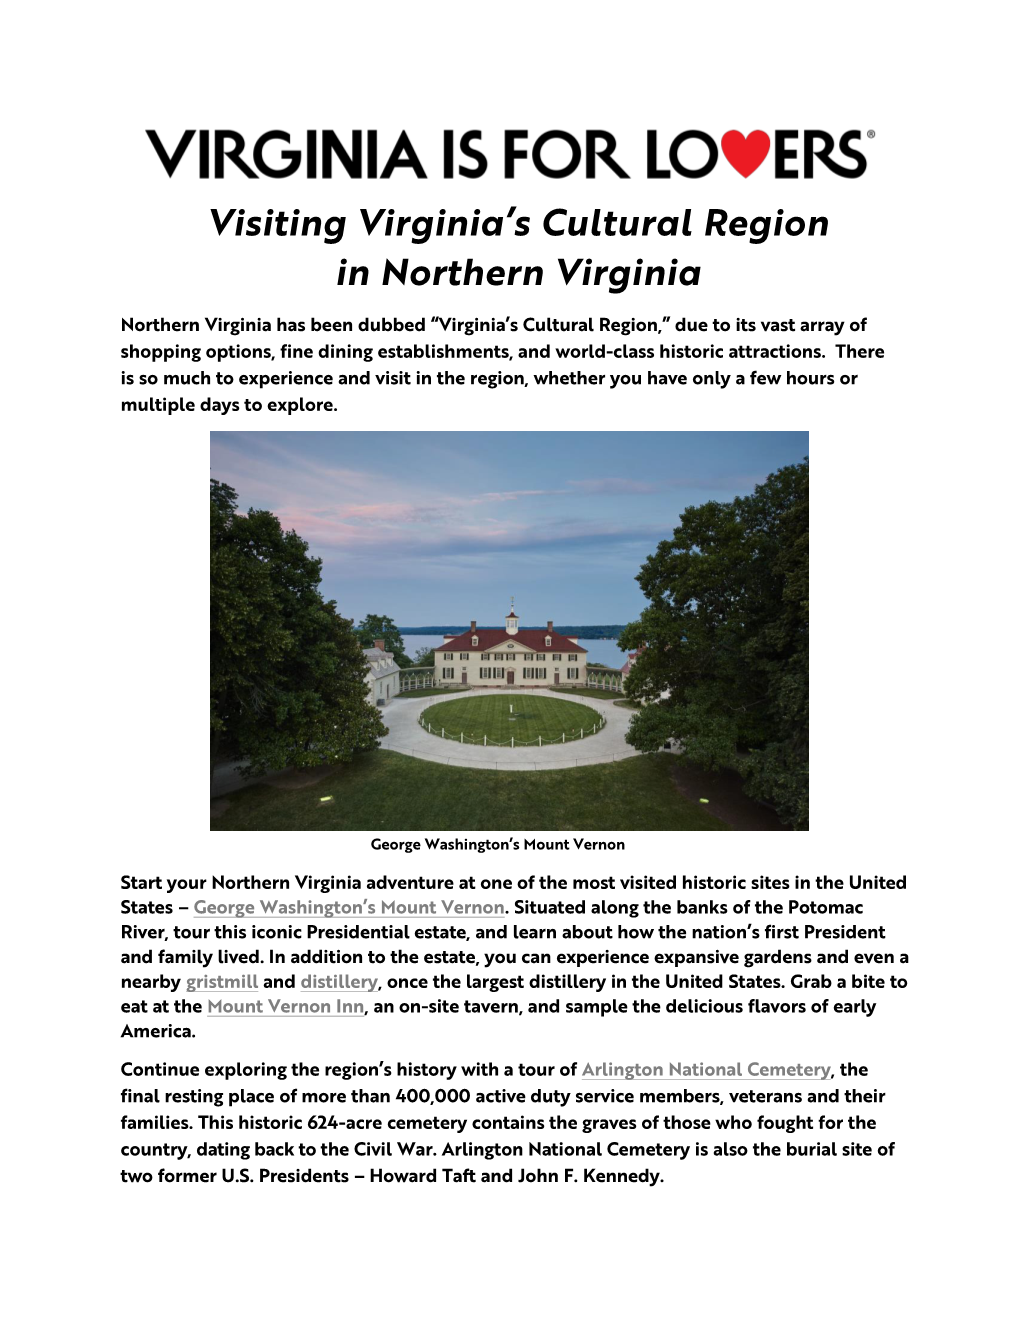 Visiting Virginia's Cultural Region in Northern Virginia